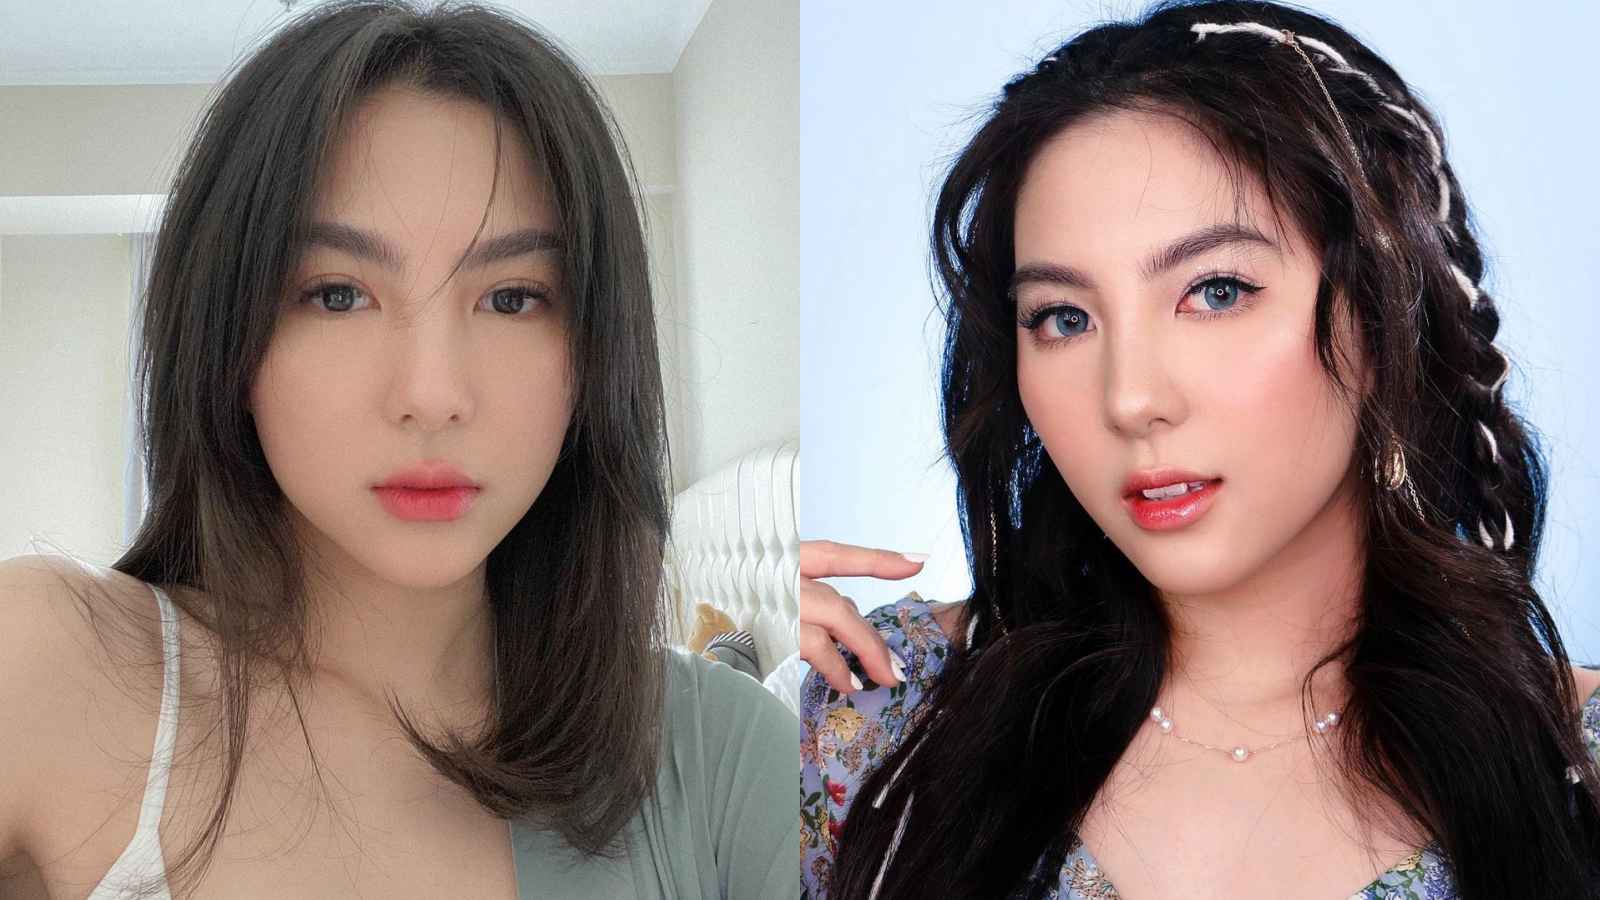 Fakta dan Profil Devienna, Beauty Vlogger Cantik yang Belajar Make-up Secara Otodidak